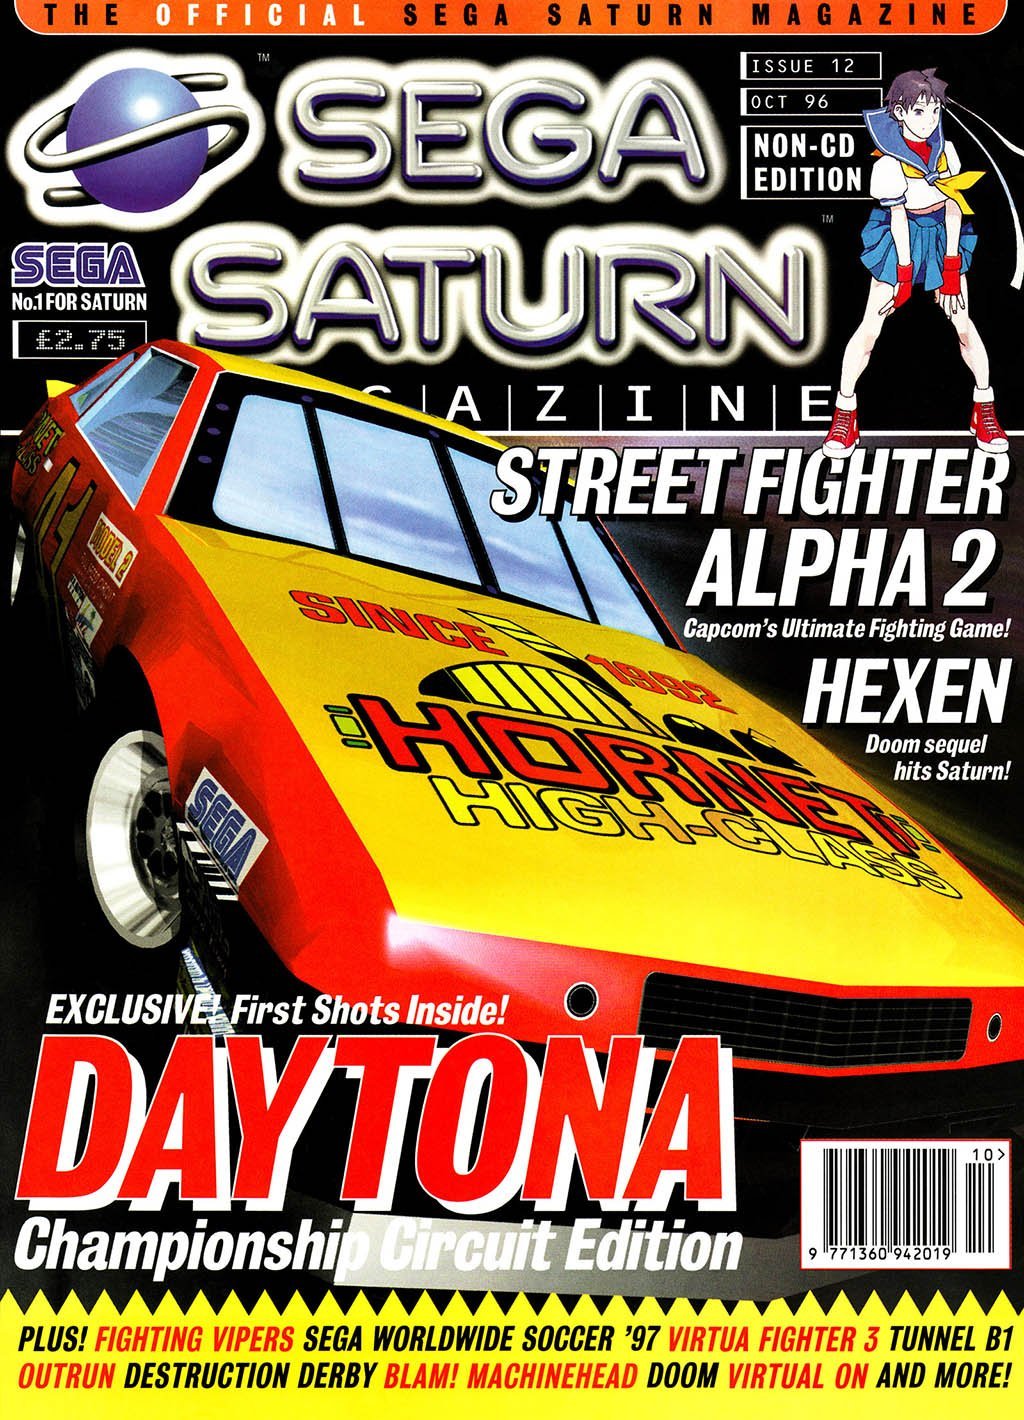 Official Sega Saturn Magazine 12 (October 1996)